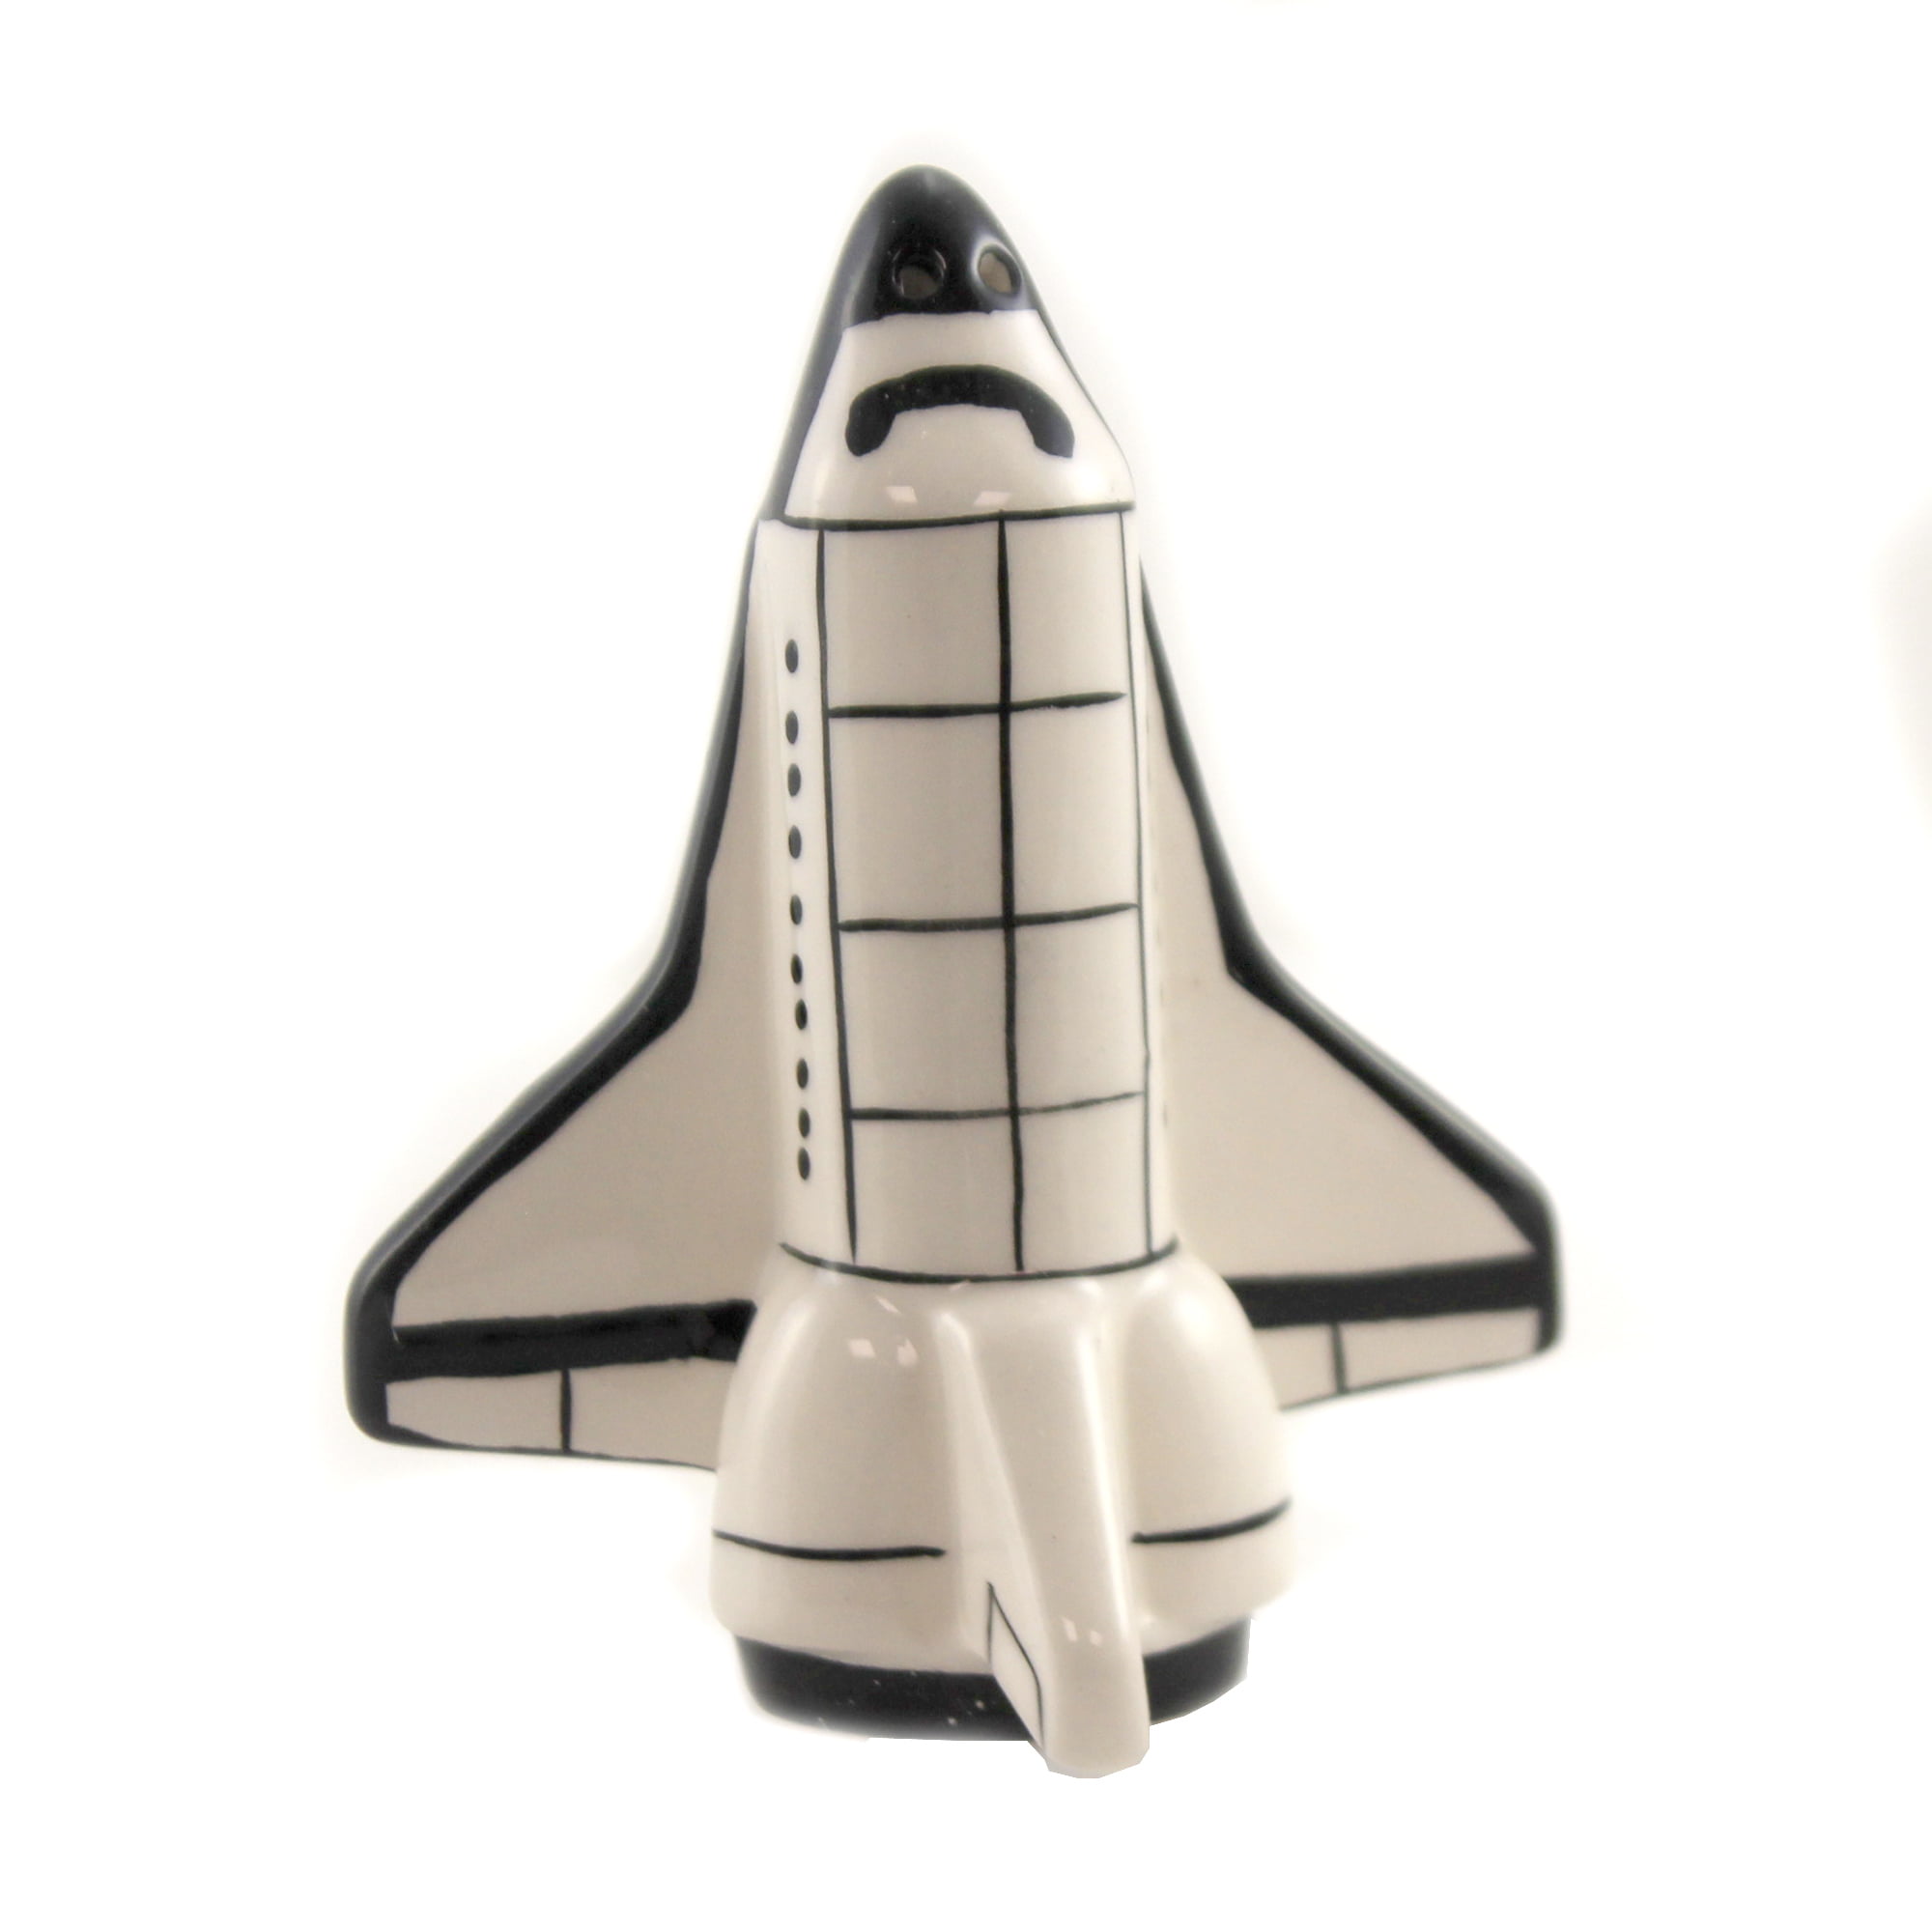 Space Shuttle Attractives Salt Pepper Shaker Made of Ceramic 